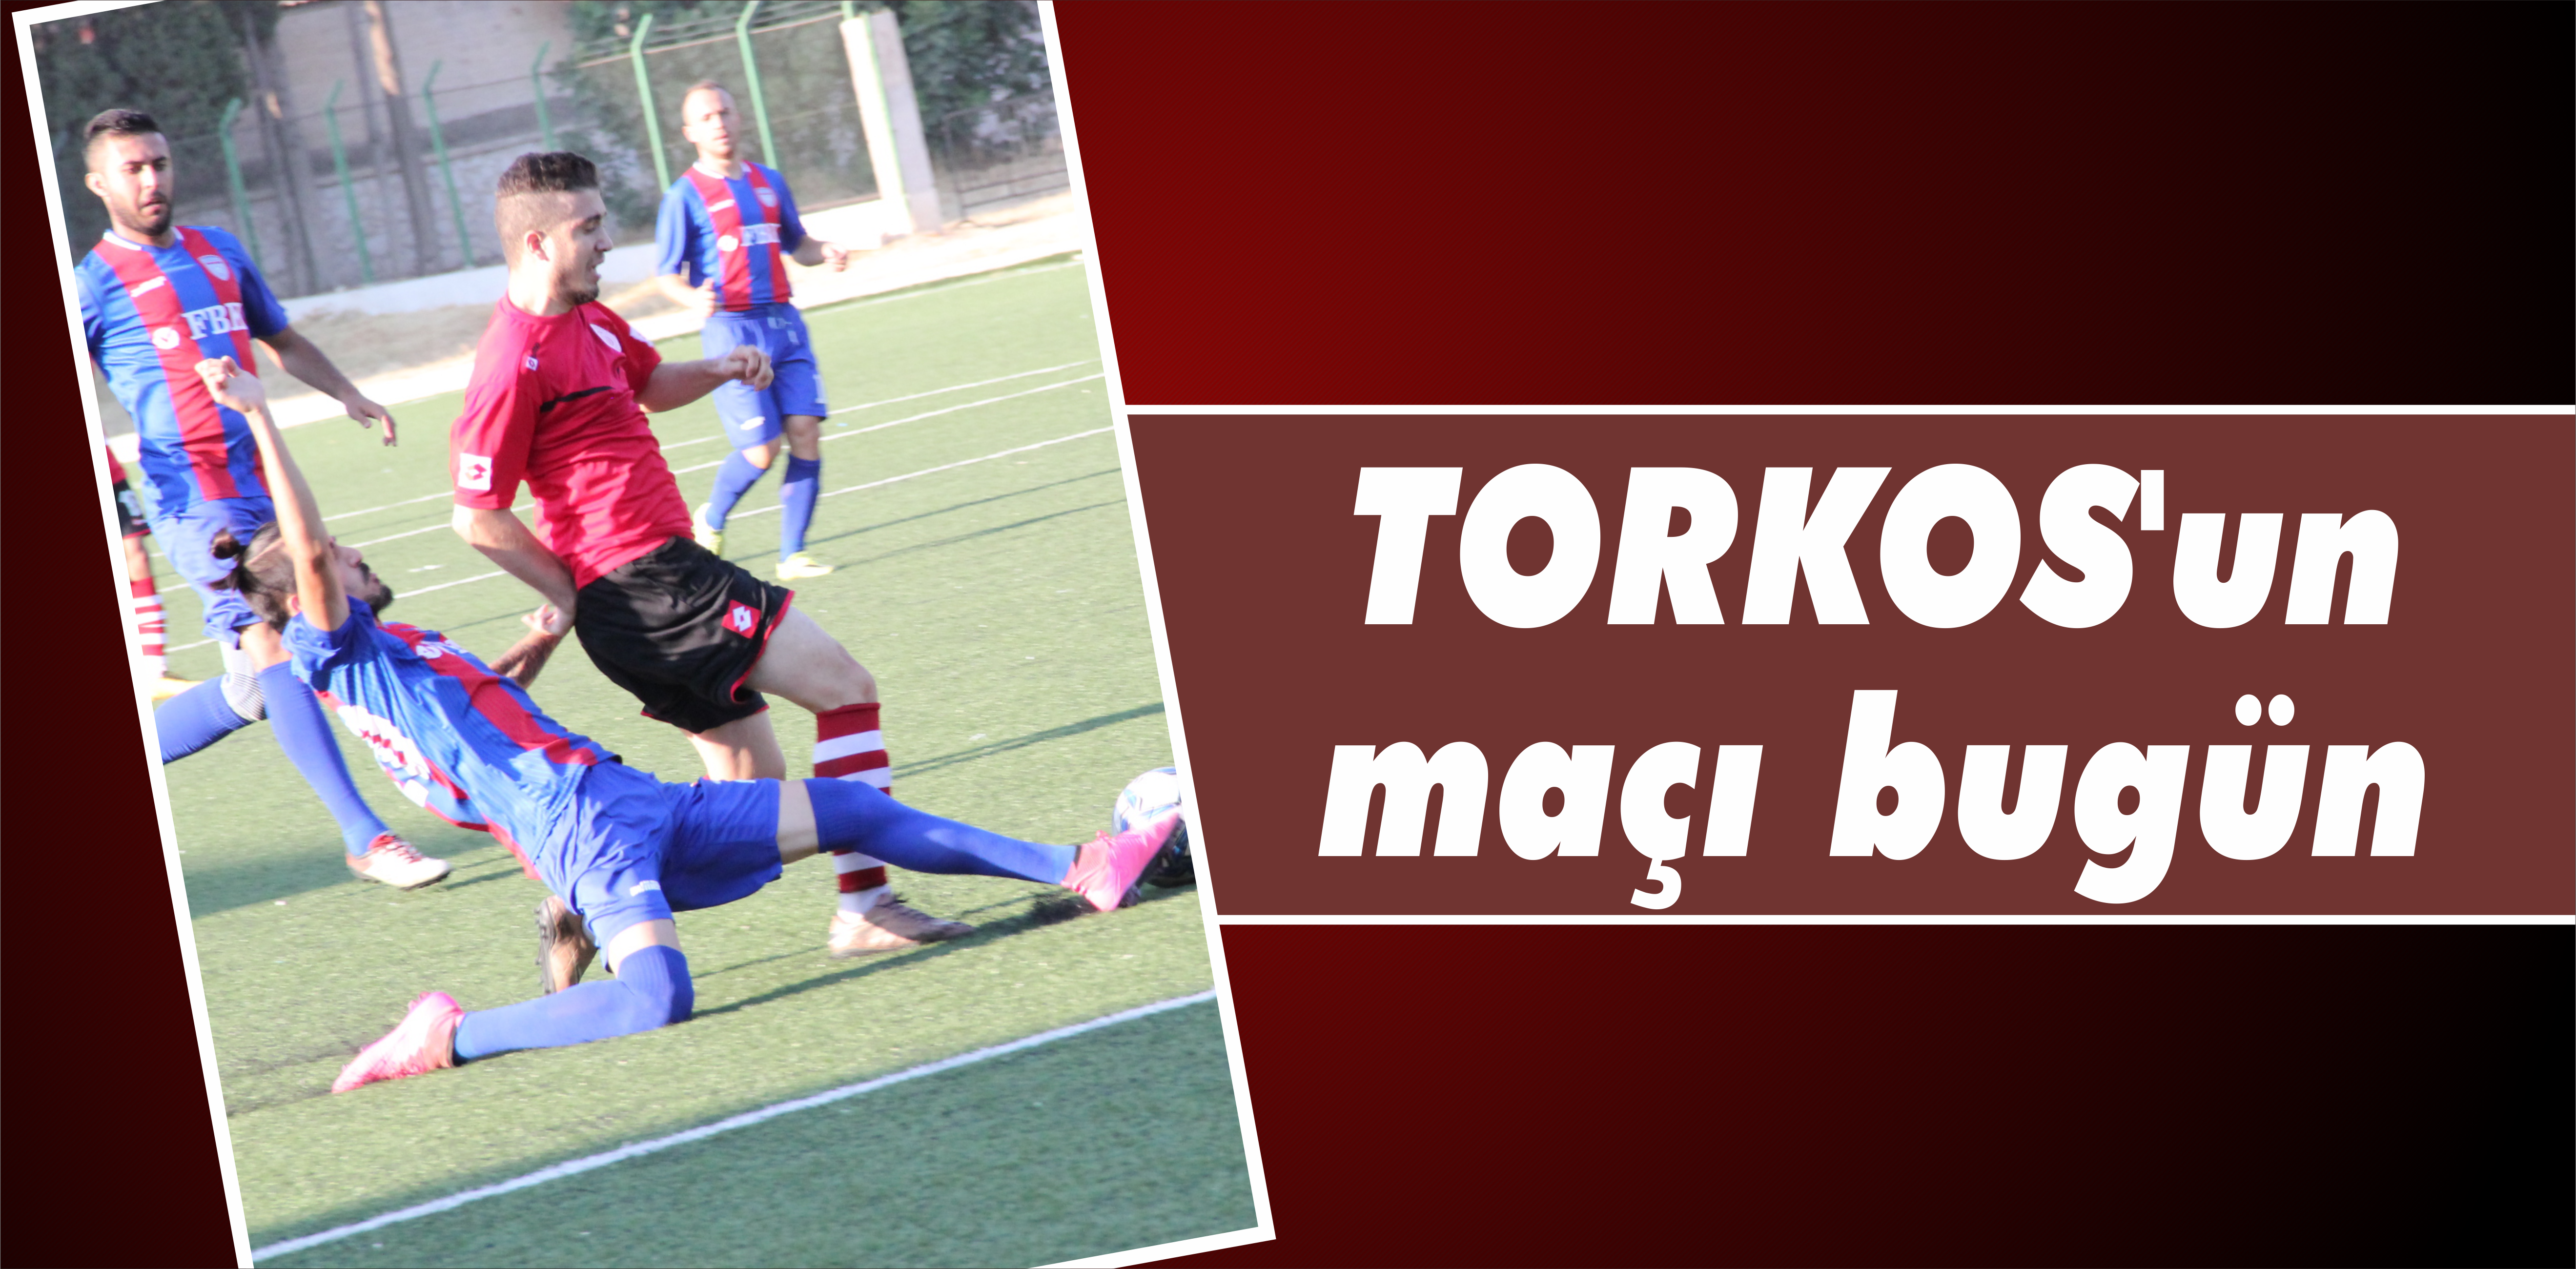 TORKOS’un maçı bugün